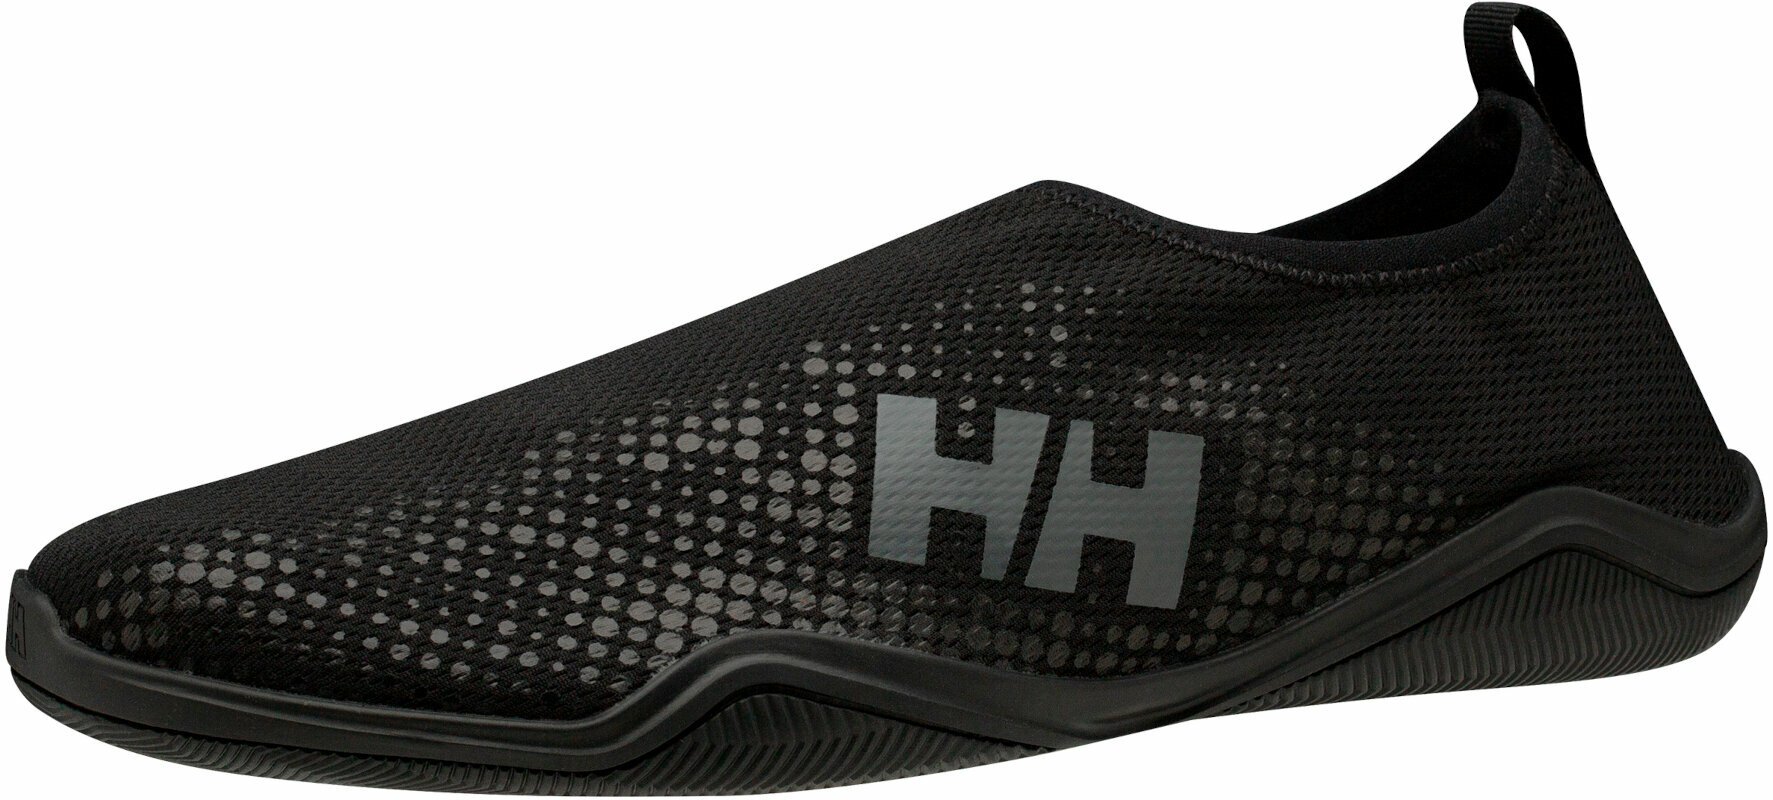 Jachtařská obuv Helly Hansen Men's Crest Watermoc Black/Charcoal 44,5